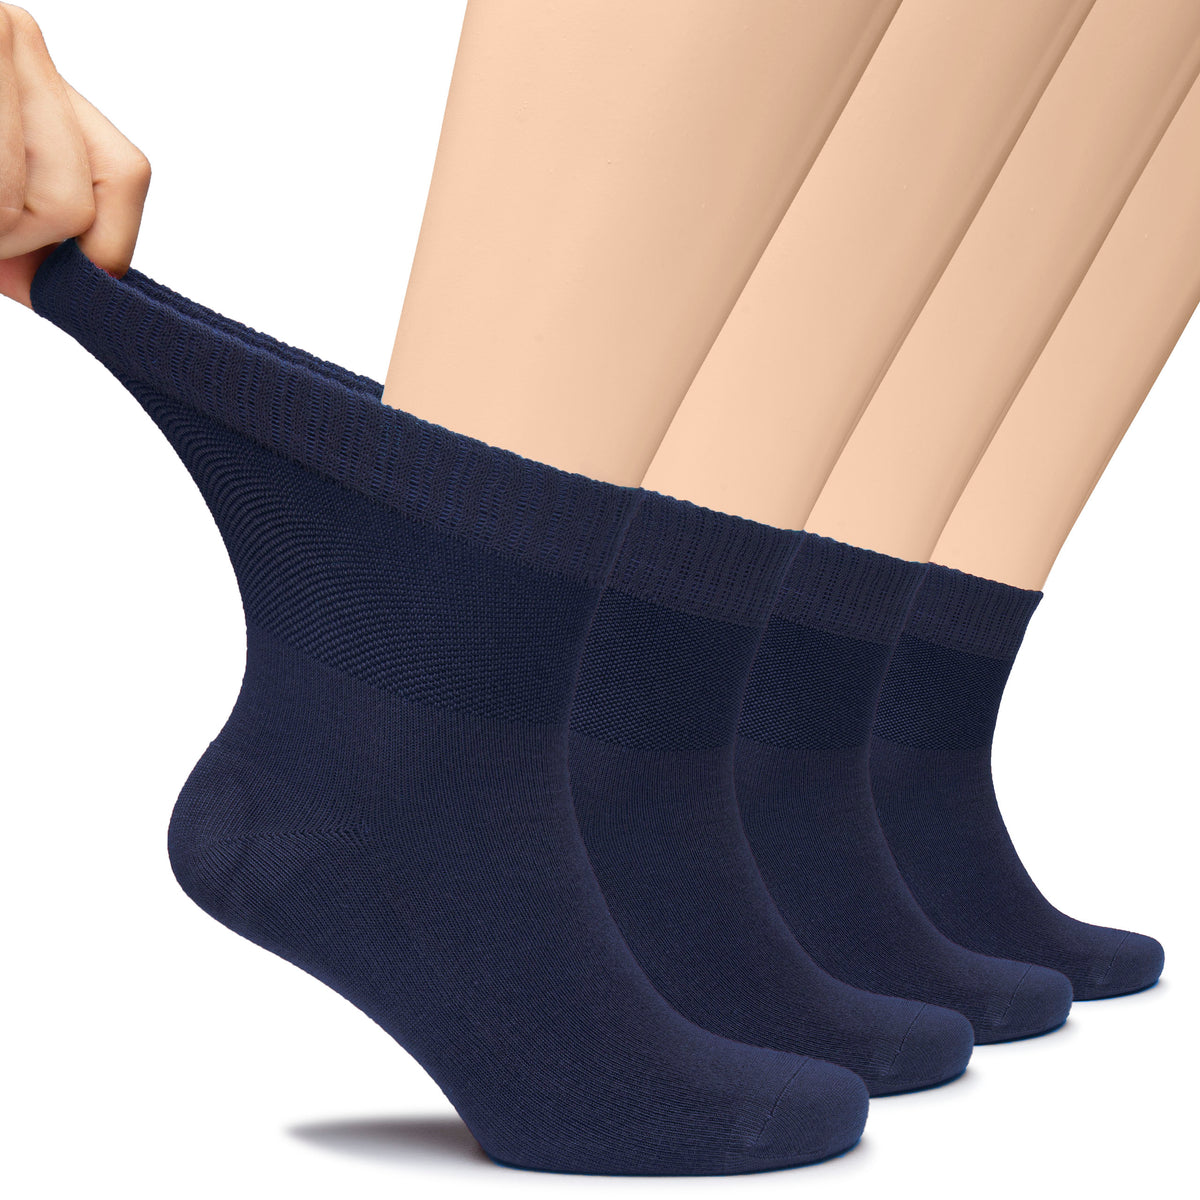 Hugh Ugoli Lightweight Men's Diabetic Ankle Socks Bamboo Thin Socks Seamless Toe and Non-Binding Top, 4 Pairs, Shoe Size 8-11/11-13 | Shoe Size: 11-13 | Melange Gray